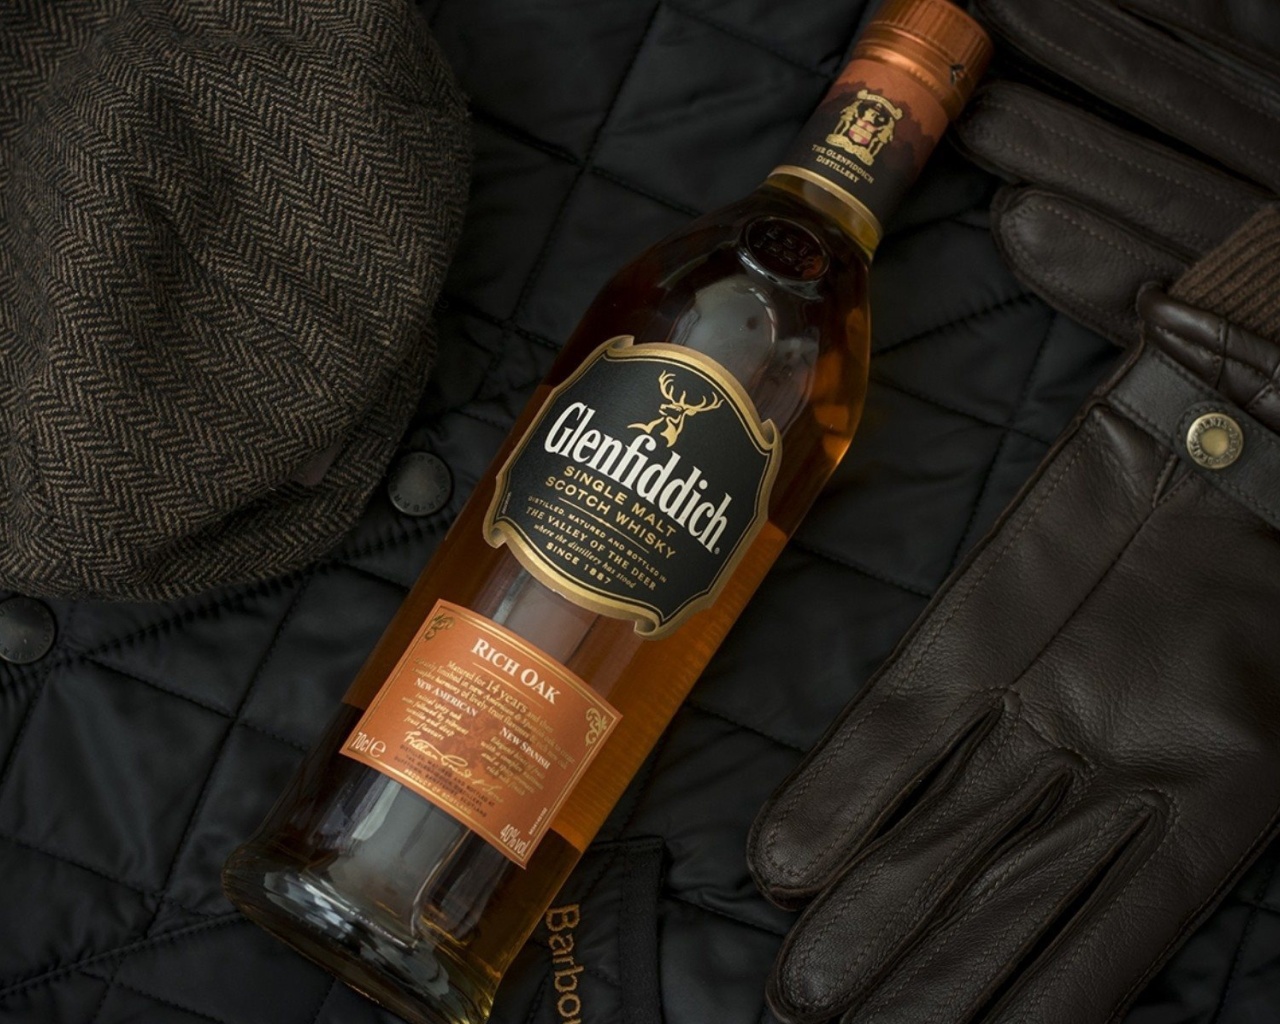 Glenfiddich single malt Scotch Whisky wallpaper 1280x1024